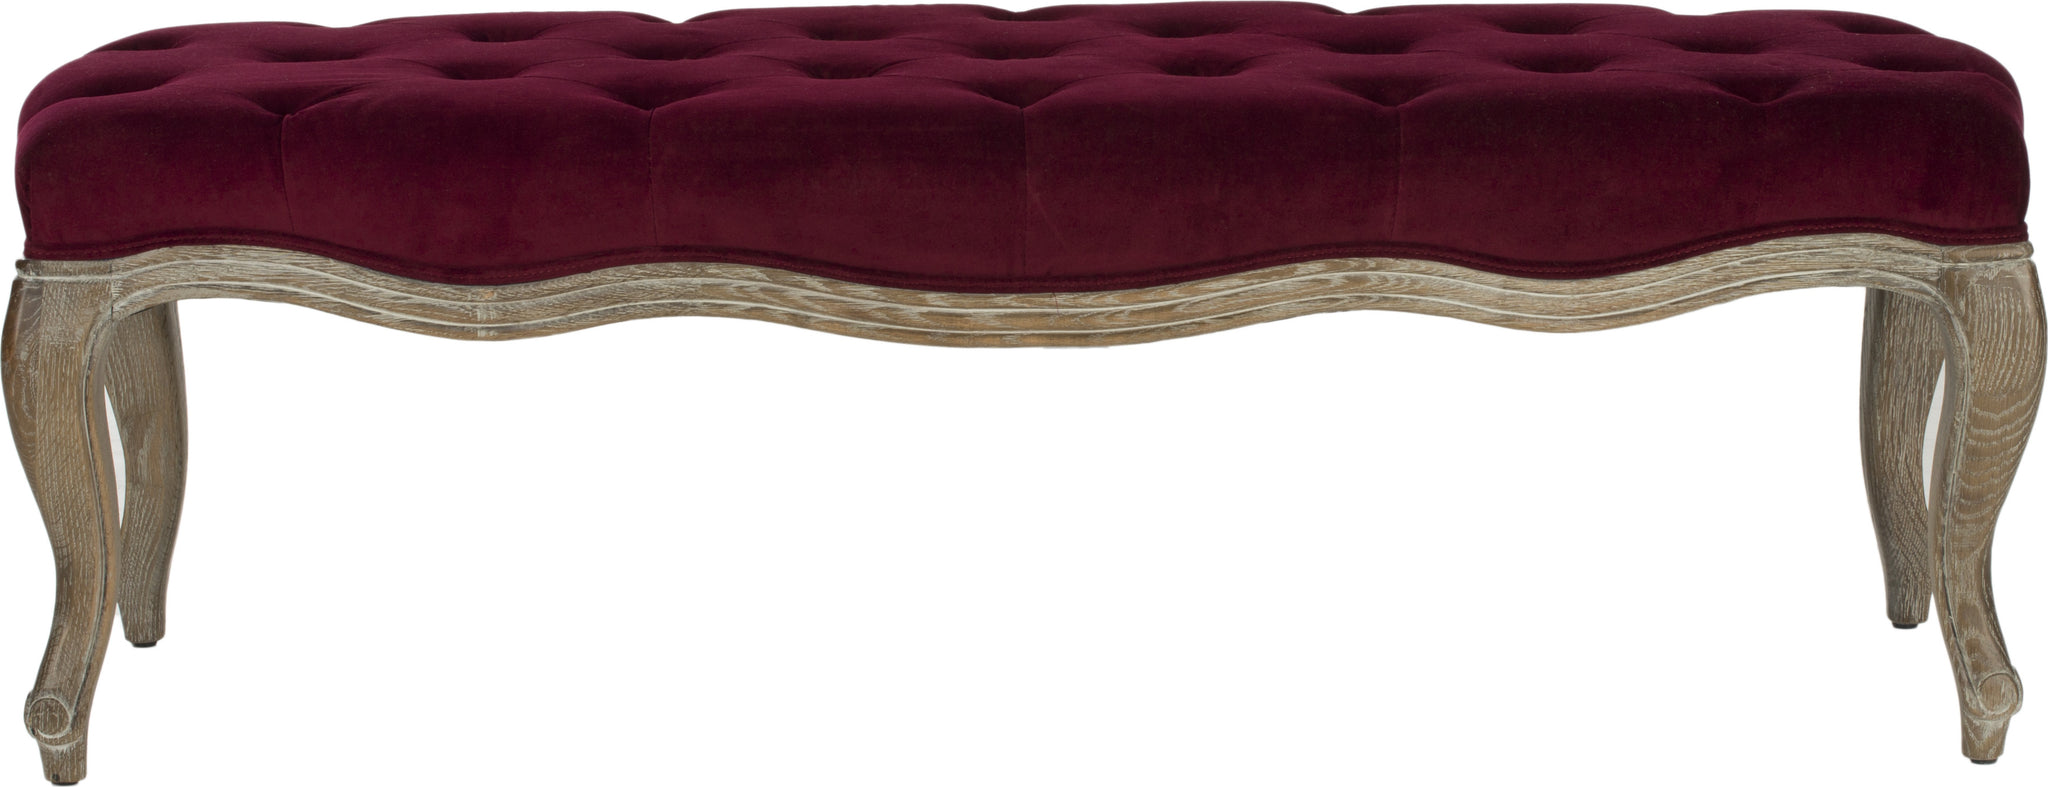 Safavieh Ramsey Bench Red Velvet and Pickled Oak Finish Furniture main image